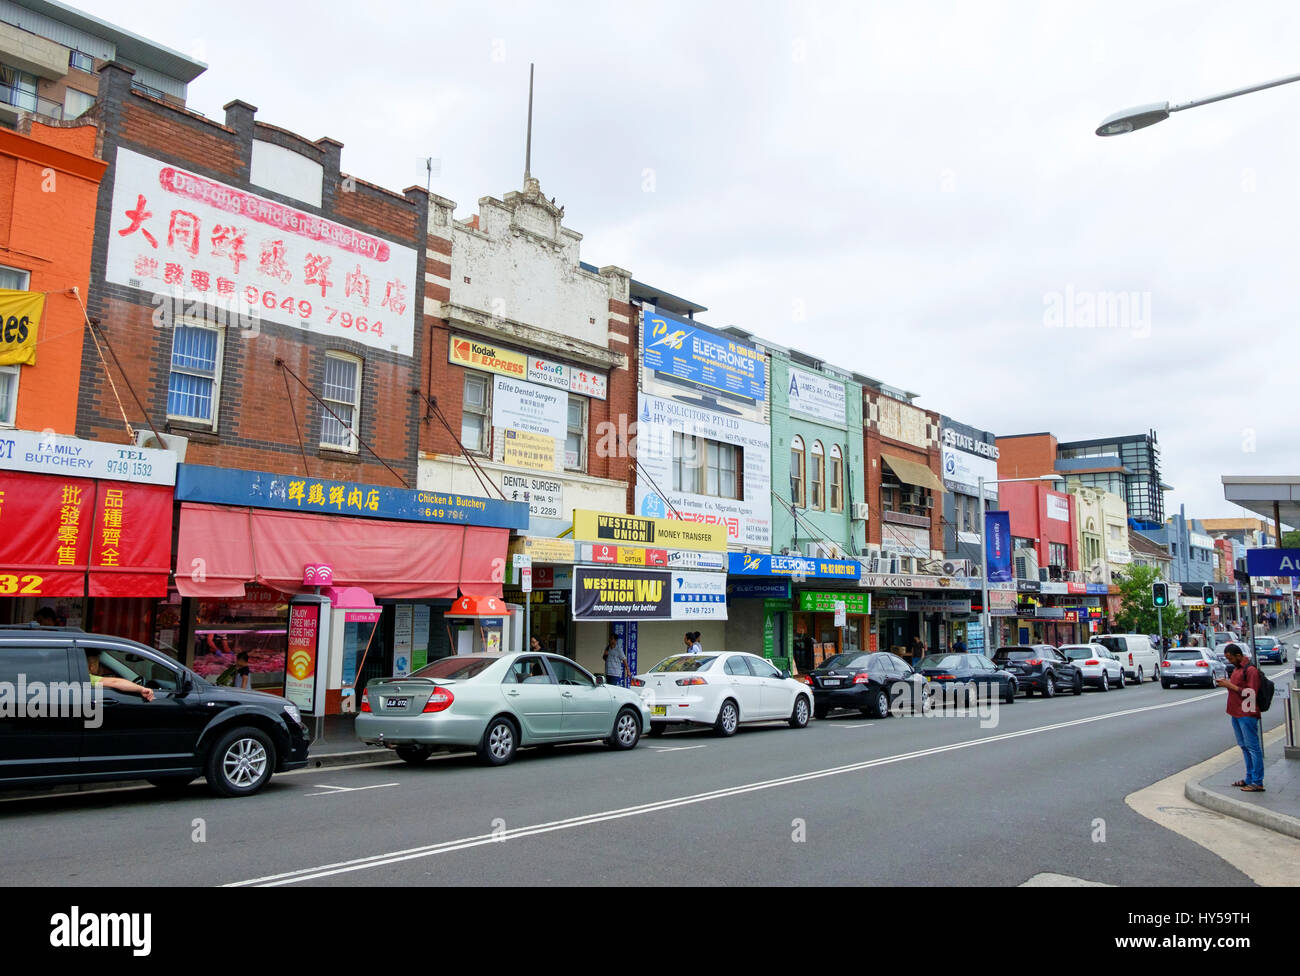 Main street of Auburn, a multicultural suburb of Western Sydney, Australia. Australian multiculturalism; shops; shop signs; cultural diversity Stock Photo